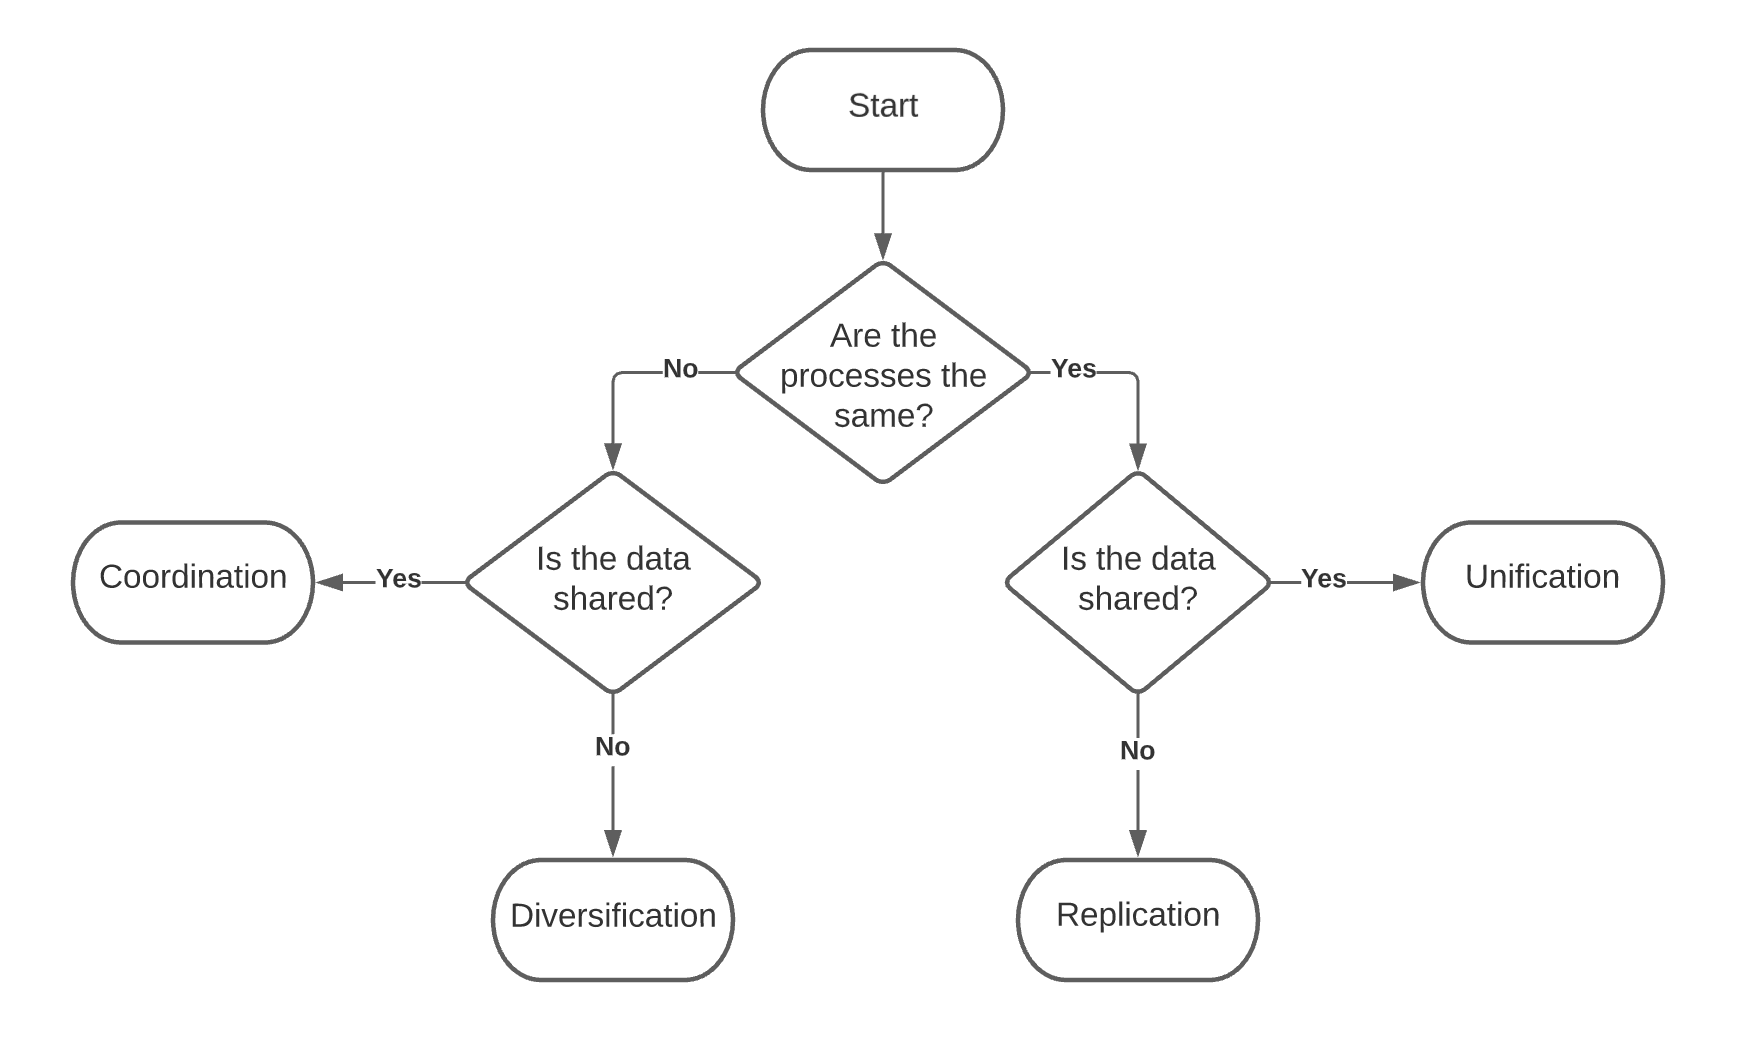 Operating model decision tree